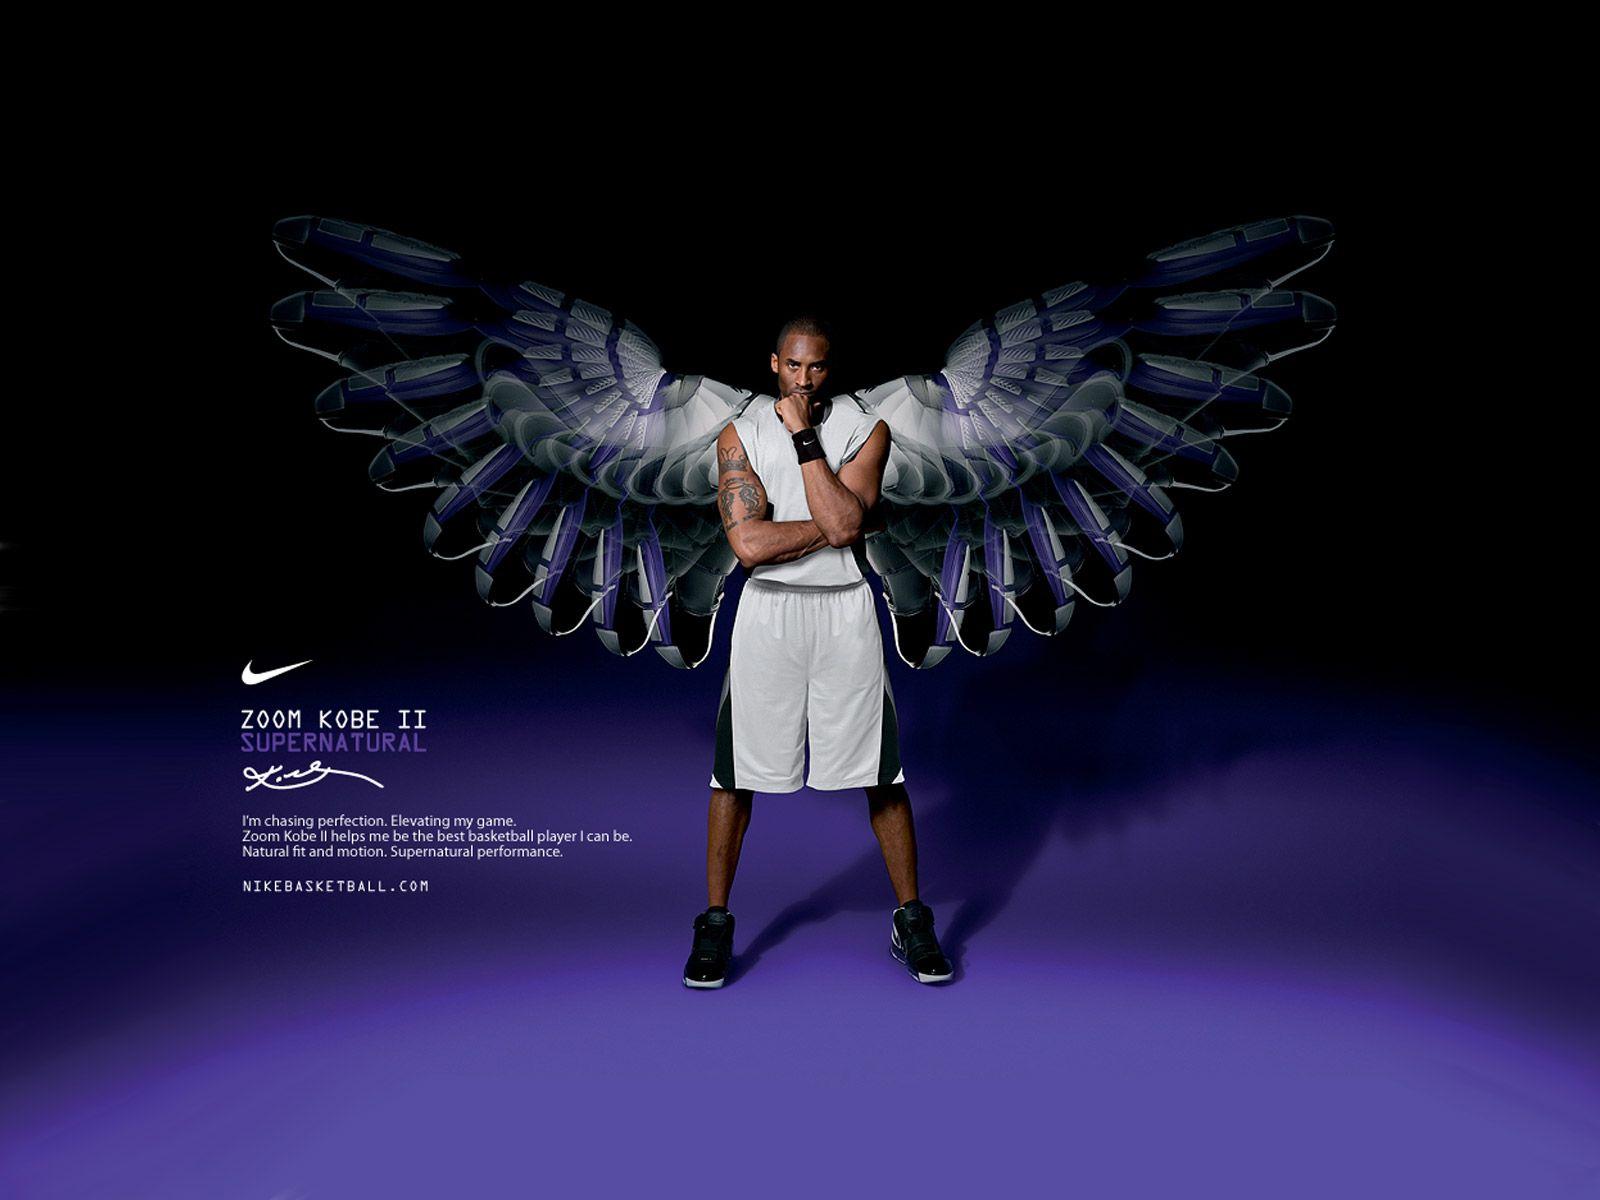 Kobe Bryant Nike Zoom Kobe II Wallpaper. Basketball Wallpaper at